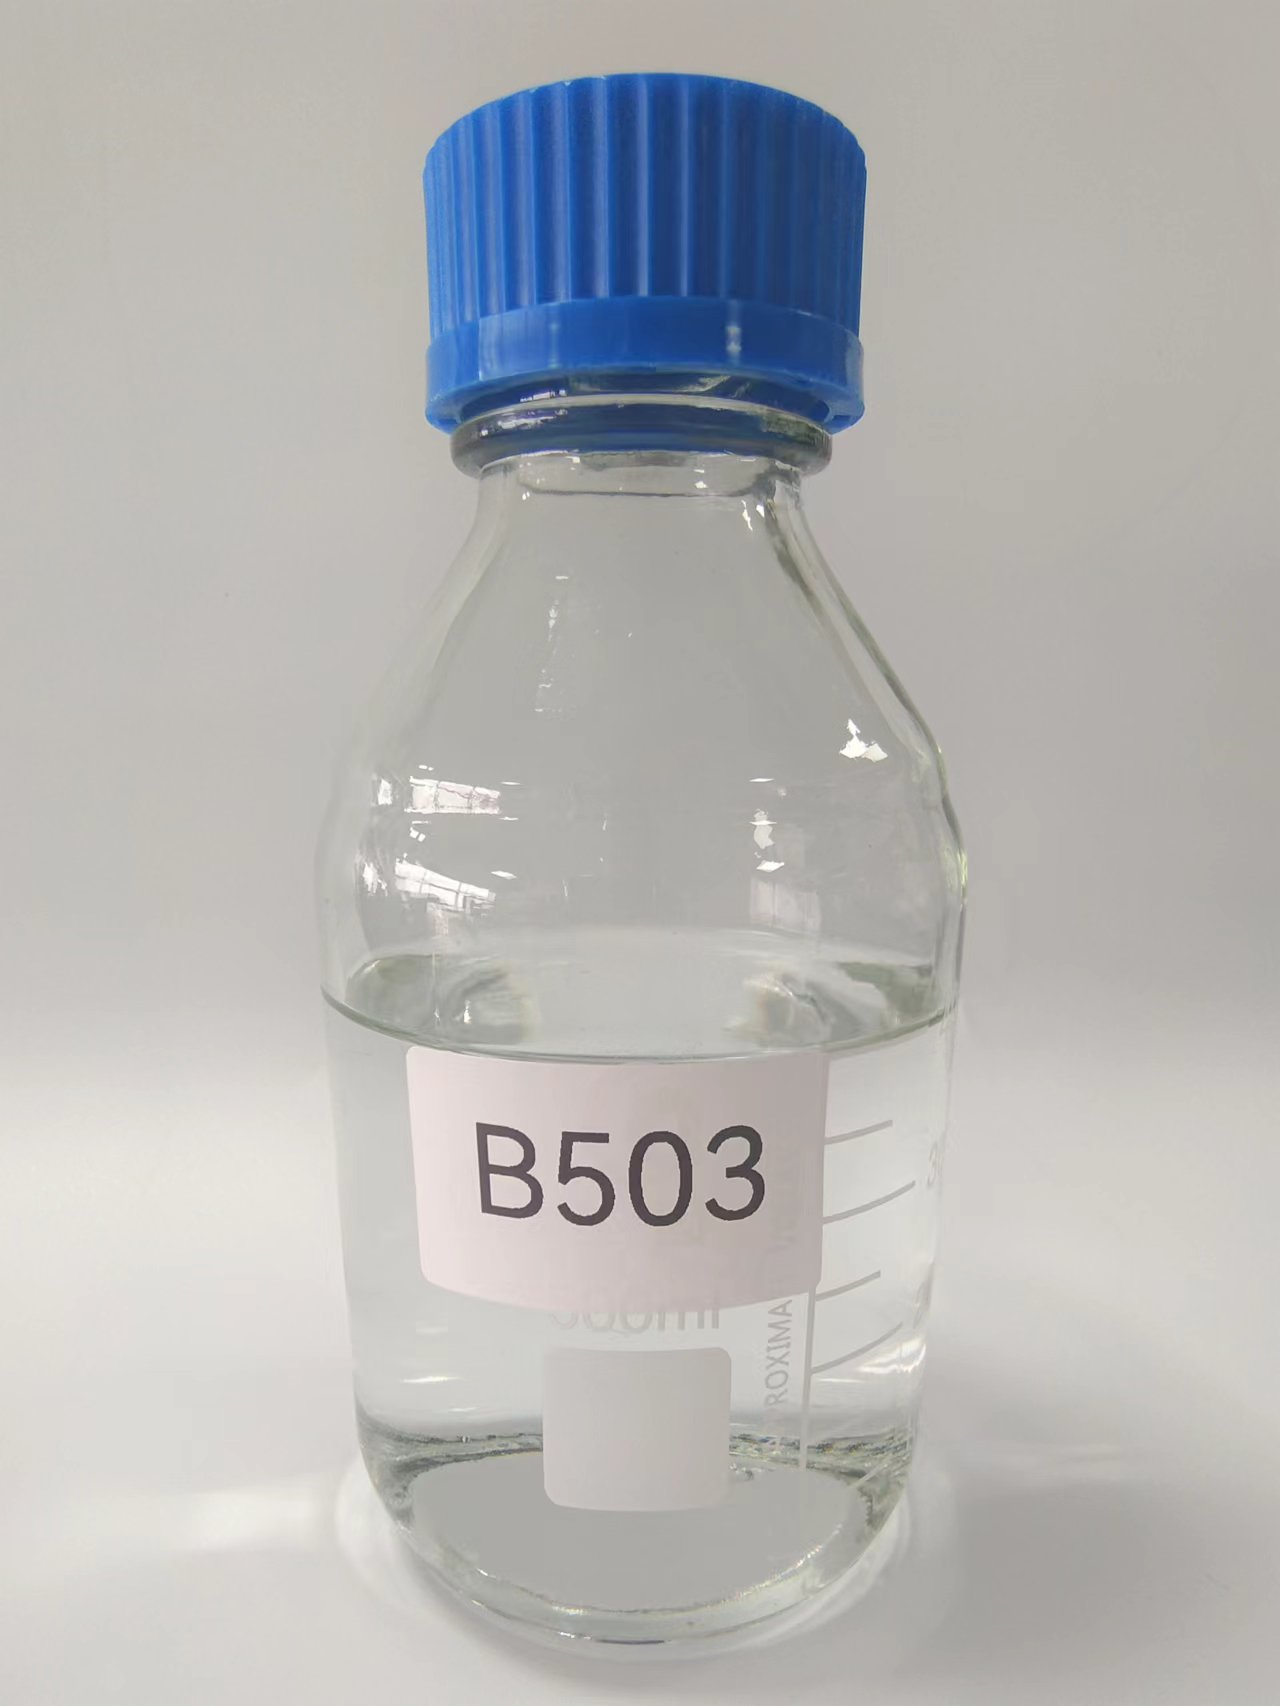 B503 Ceramic resin